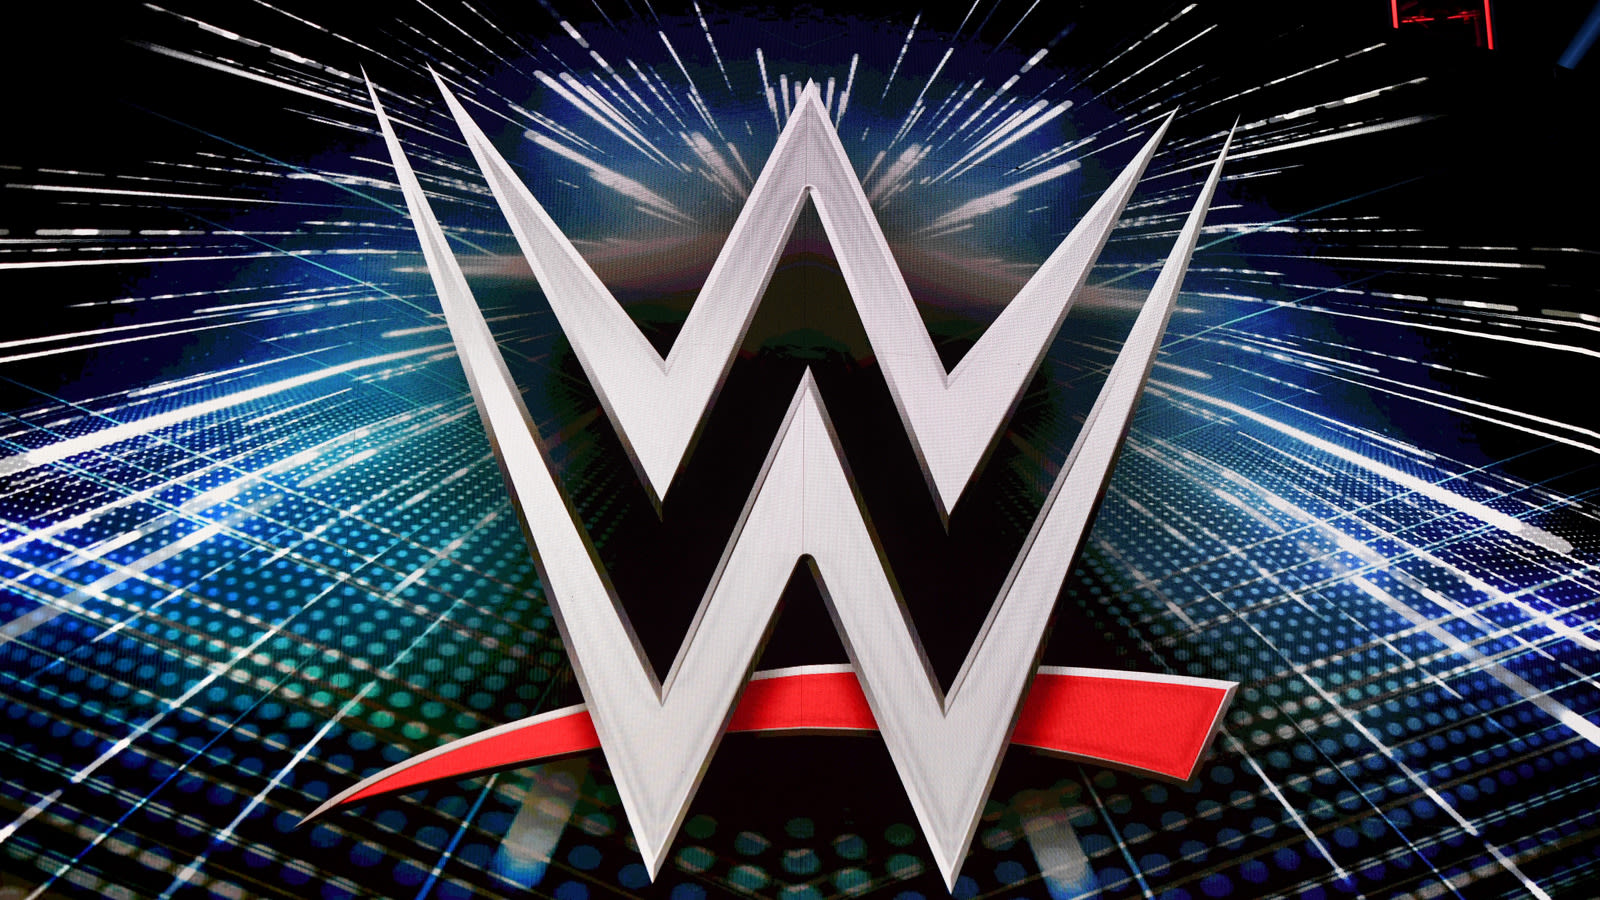 WWE Announces Return To Japan In 2024 - Wrestling Inc.